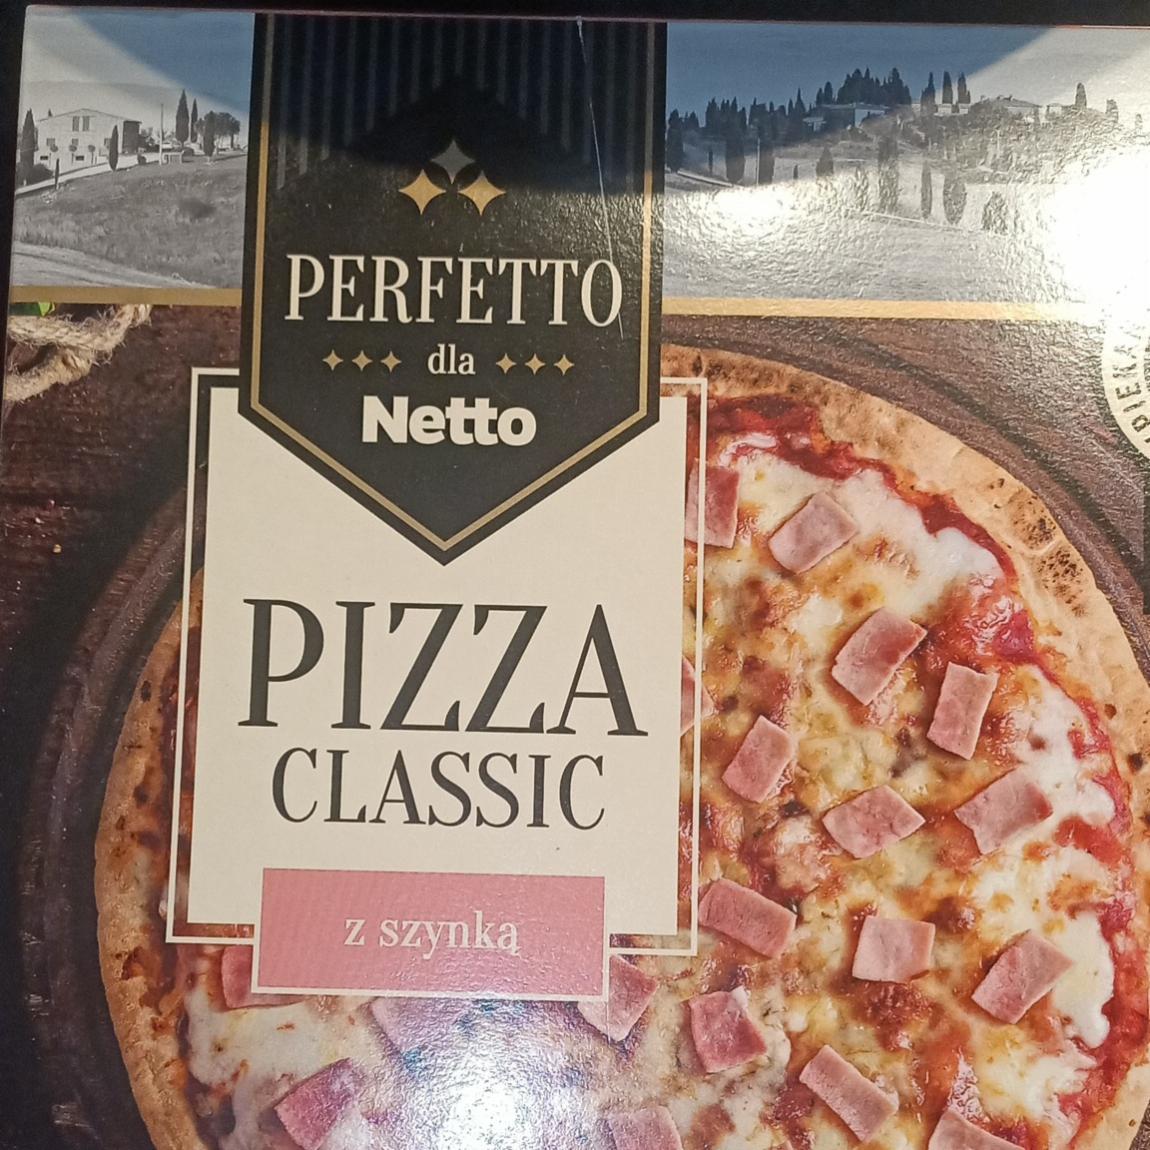 Фото - пицца с ветчиной Perfetto dla Netto